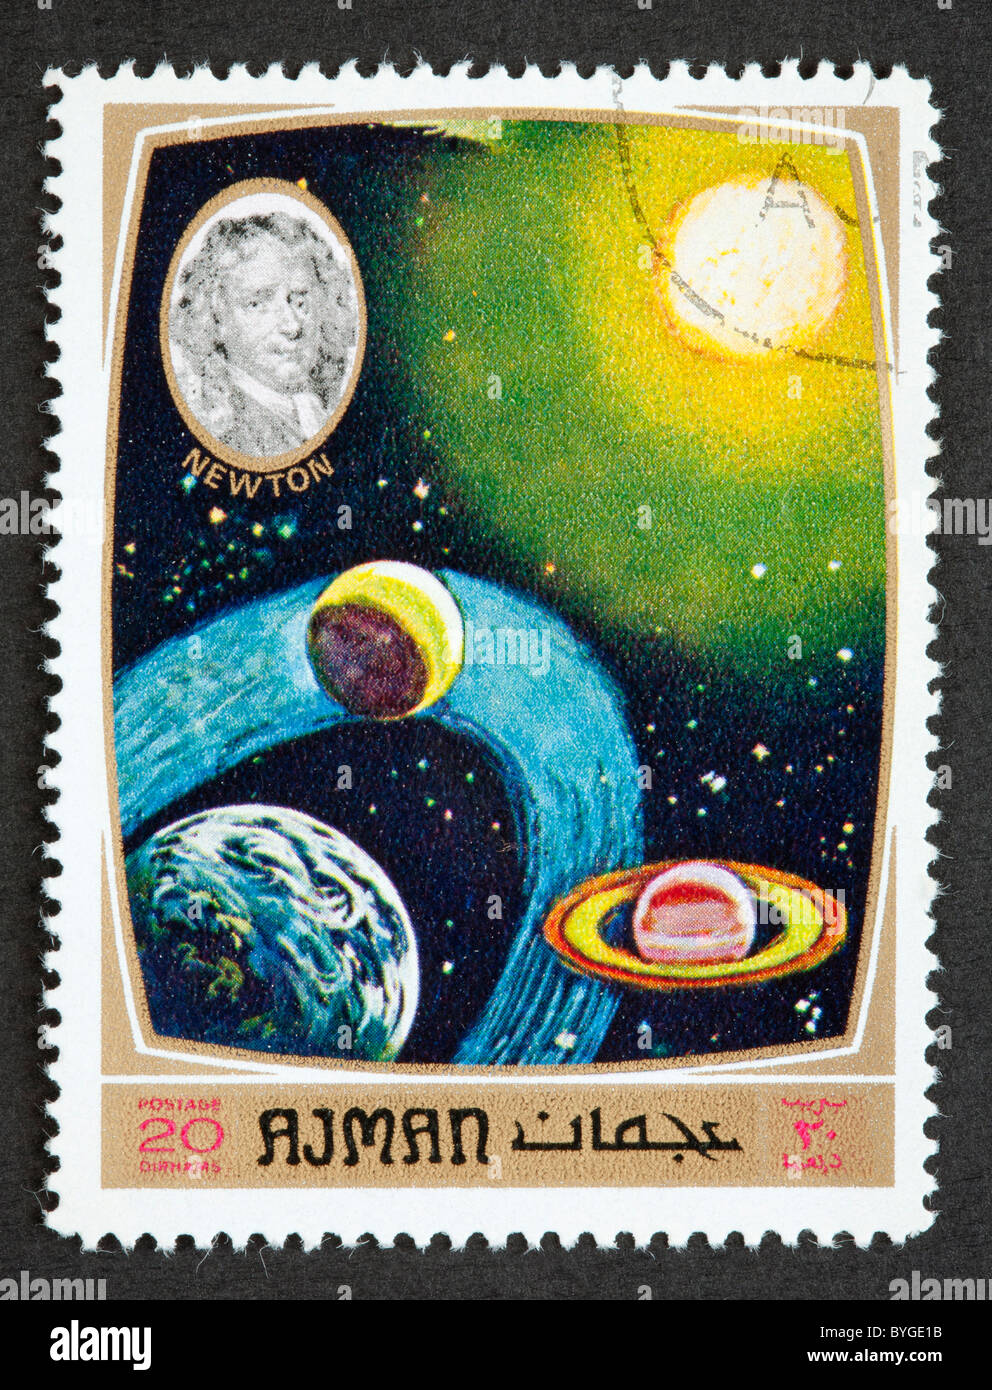 Ajman postage stamp Stock Photo